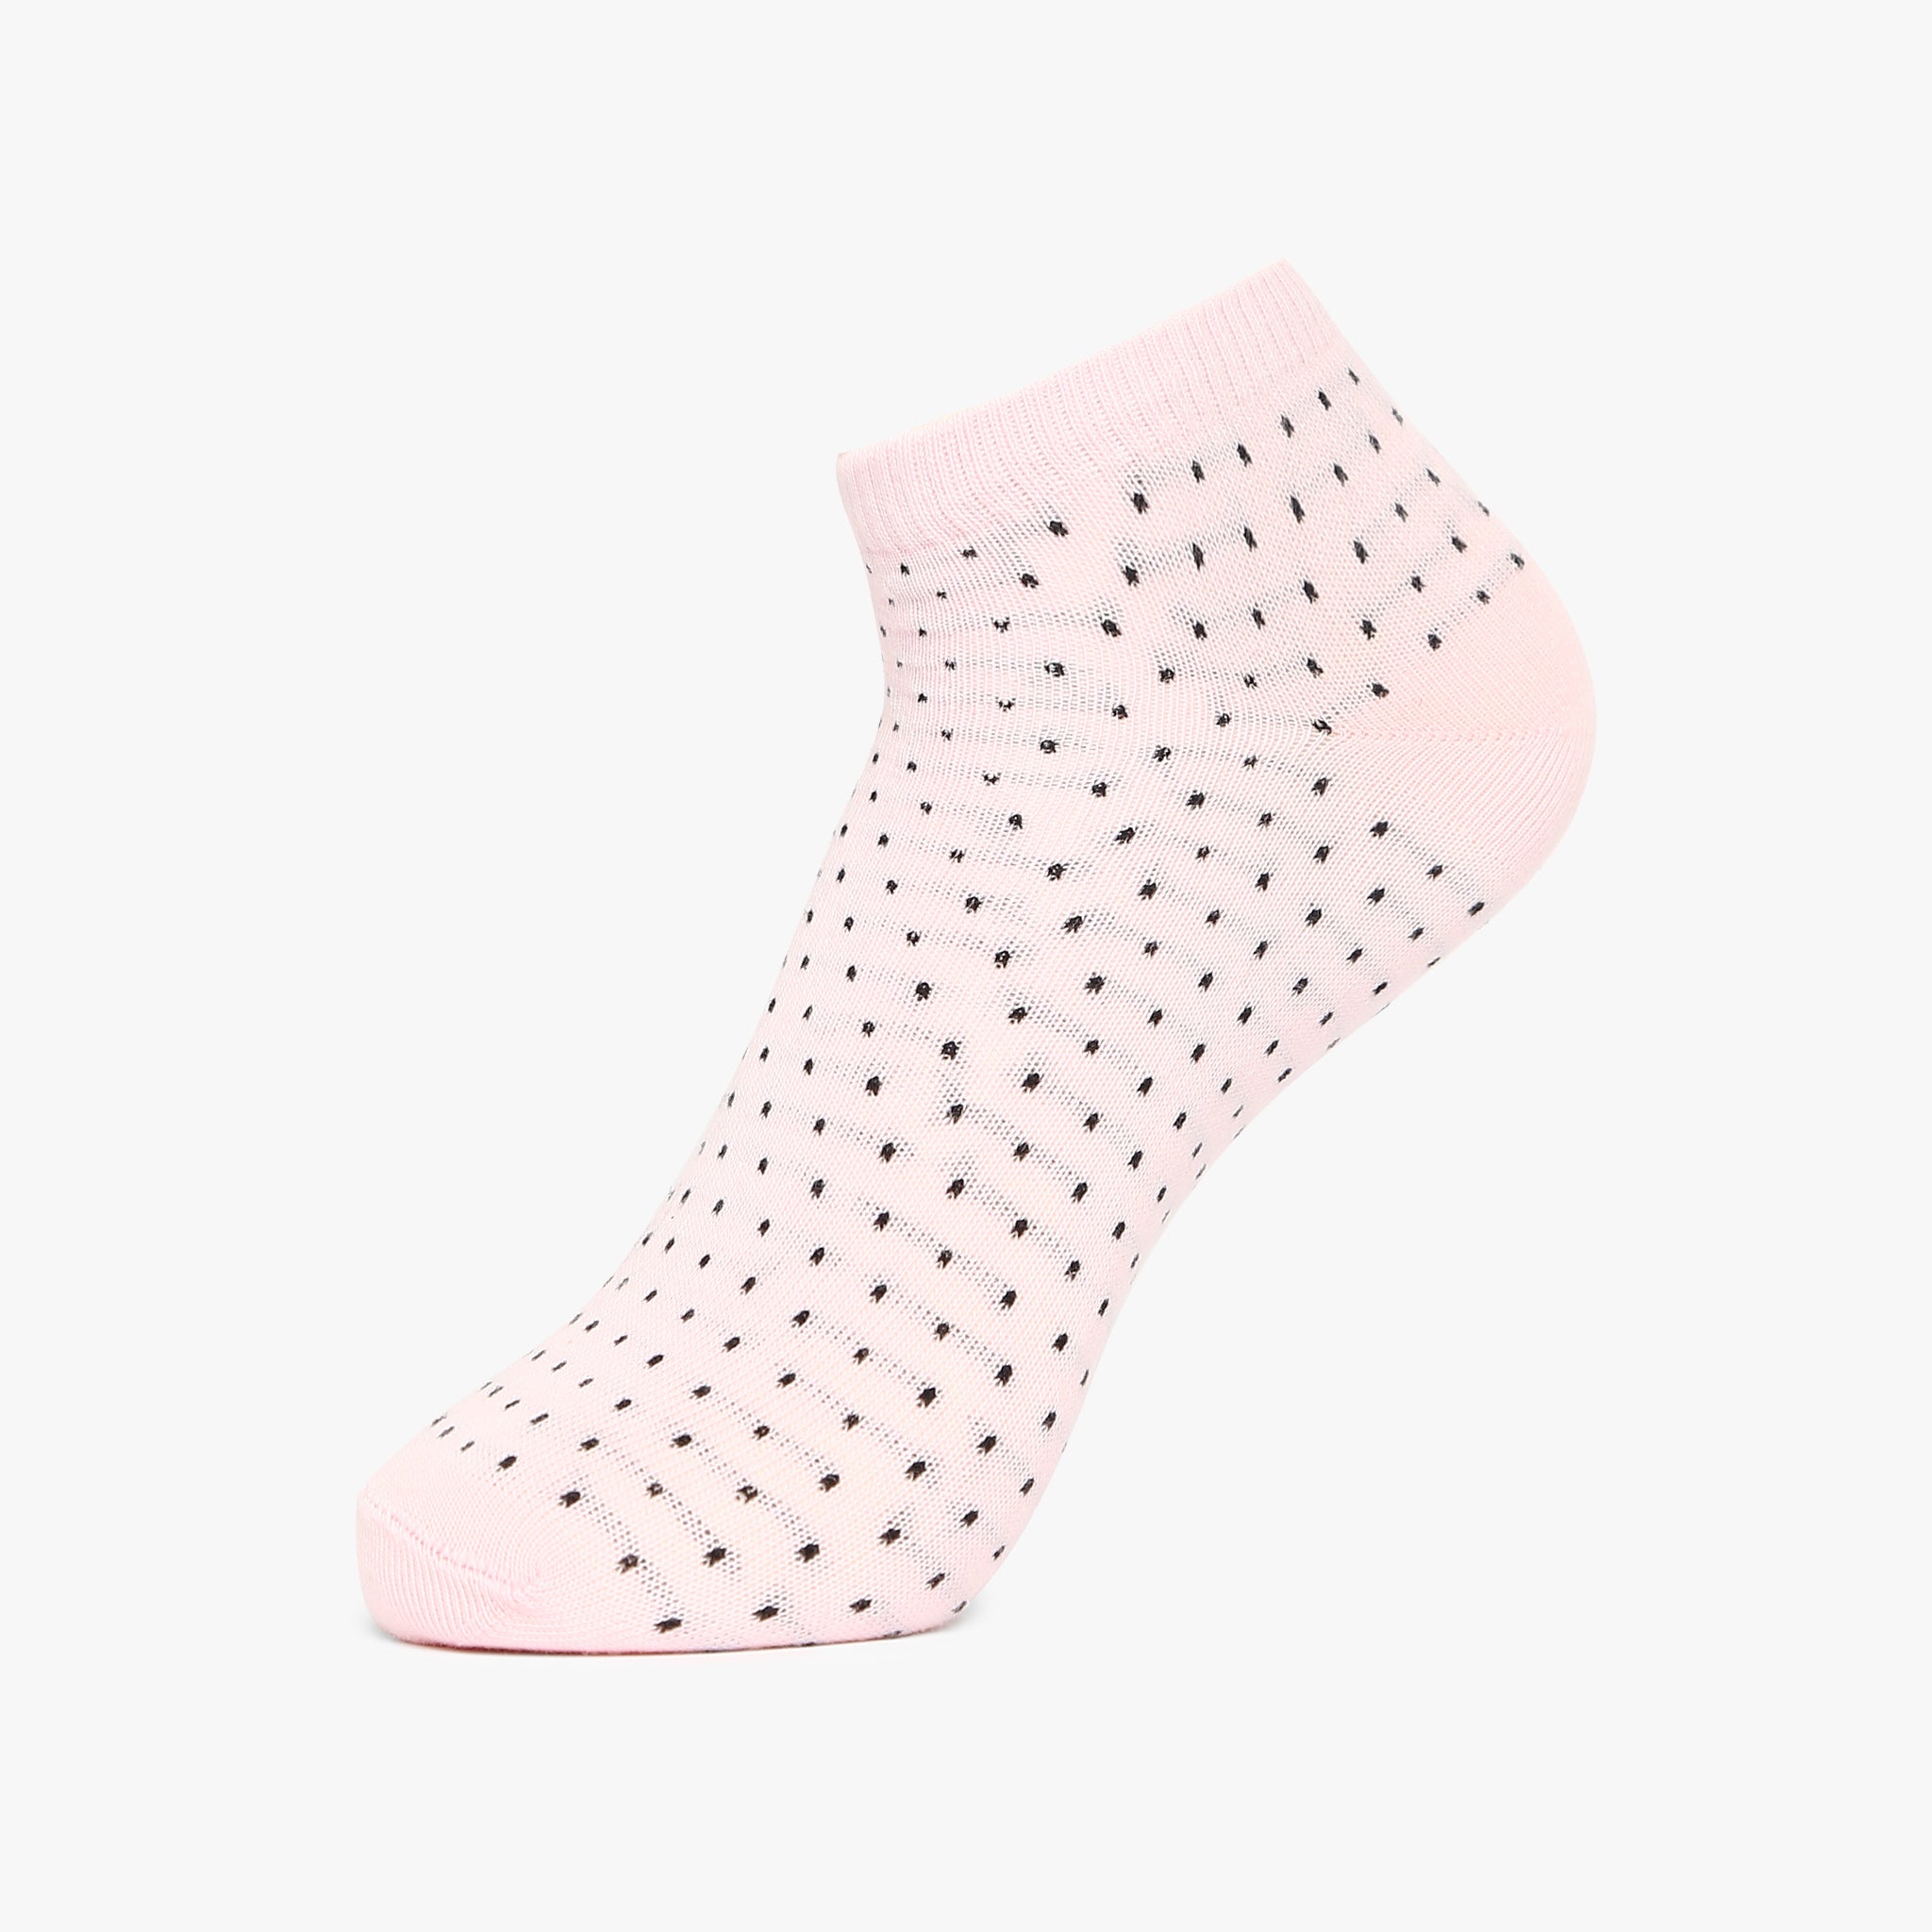 Cotton Blend Ankle Length Socks